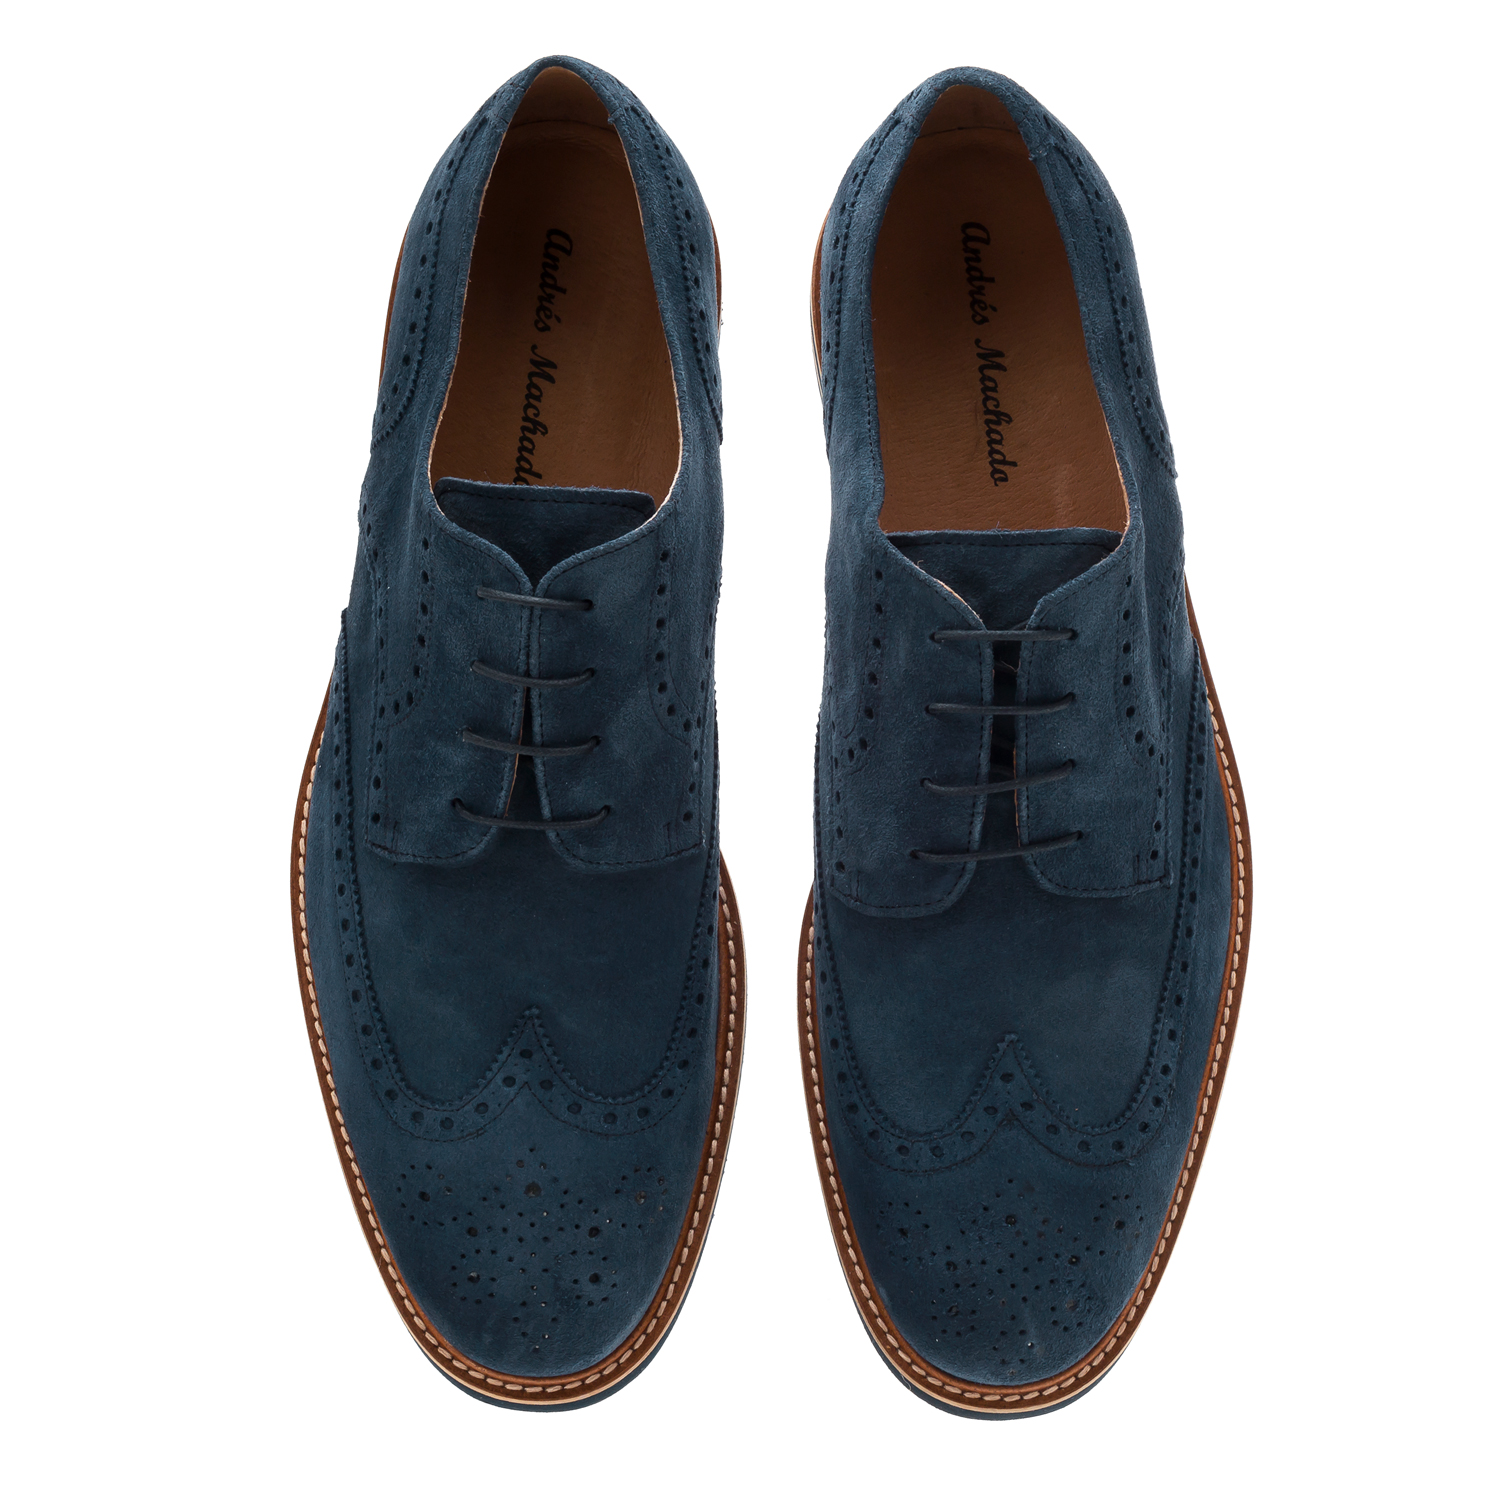 Zapatos estilo Oxford Serraje Azul 